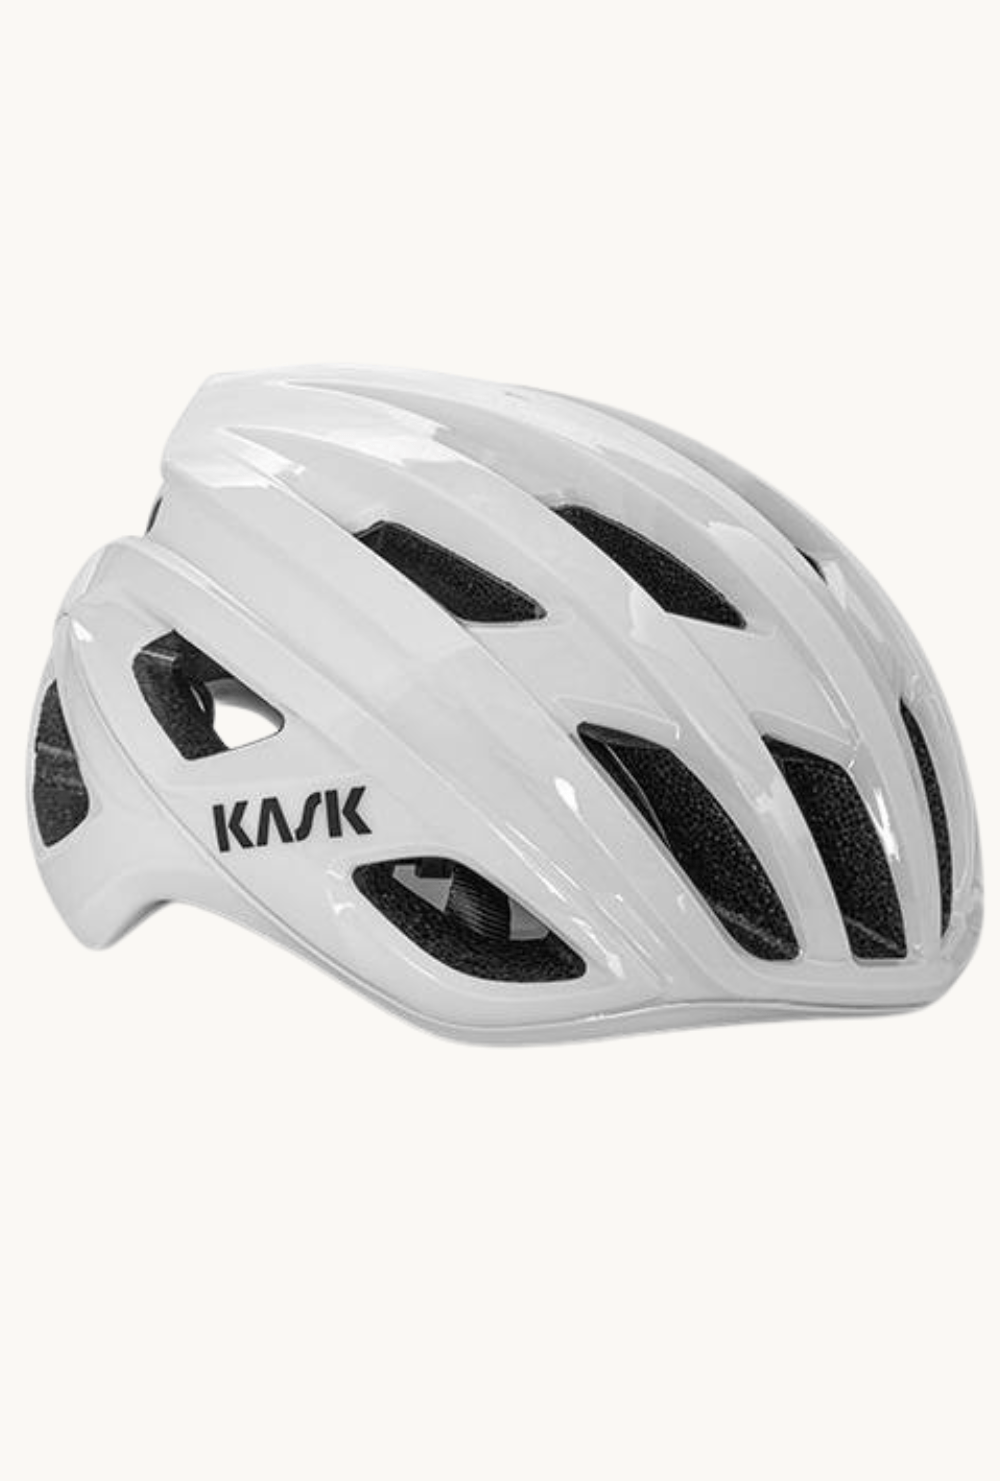 Helmet - Kask Mojito Whitemedium / White